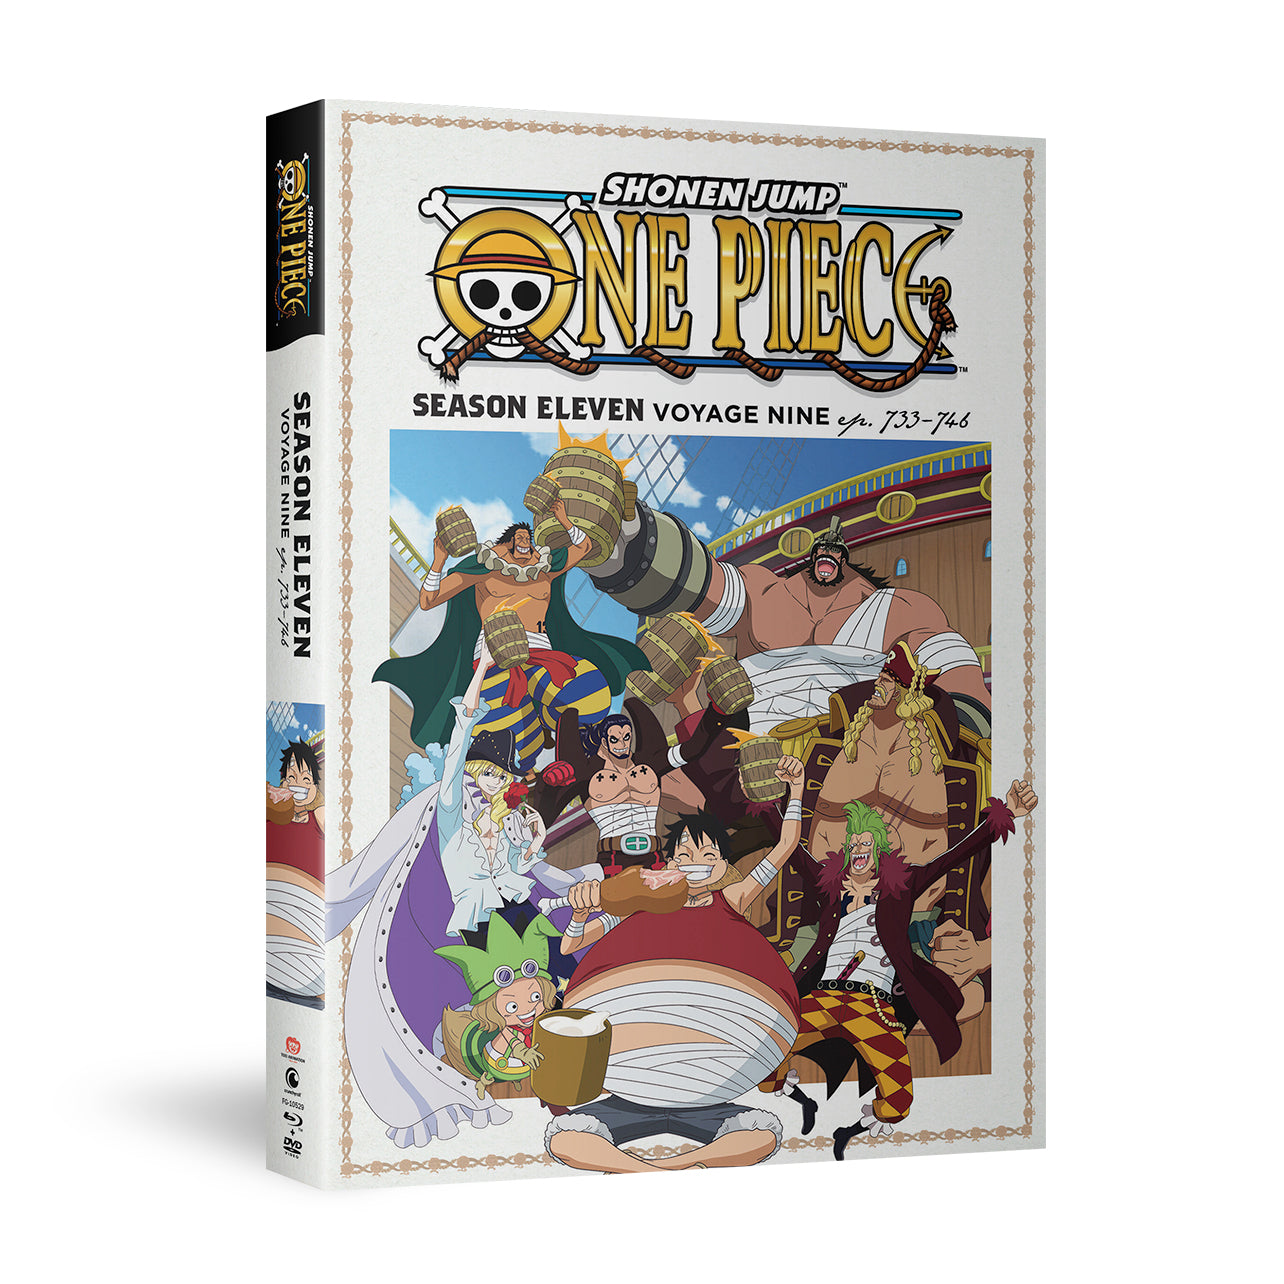 One Piece Season 11 Voyage 9 Blu Ray Dvd